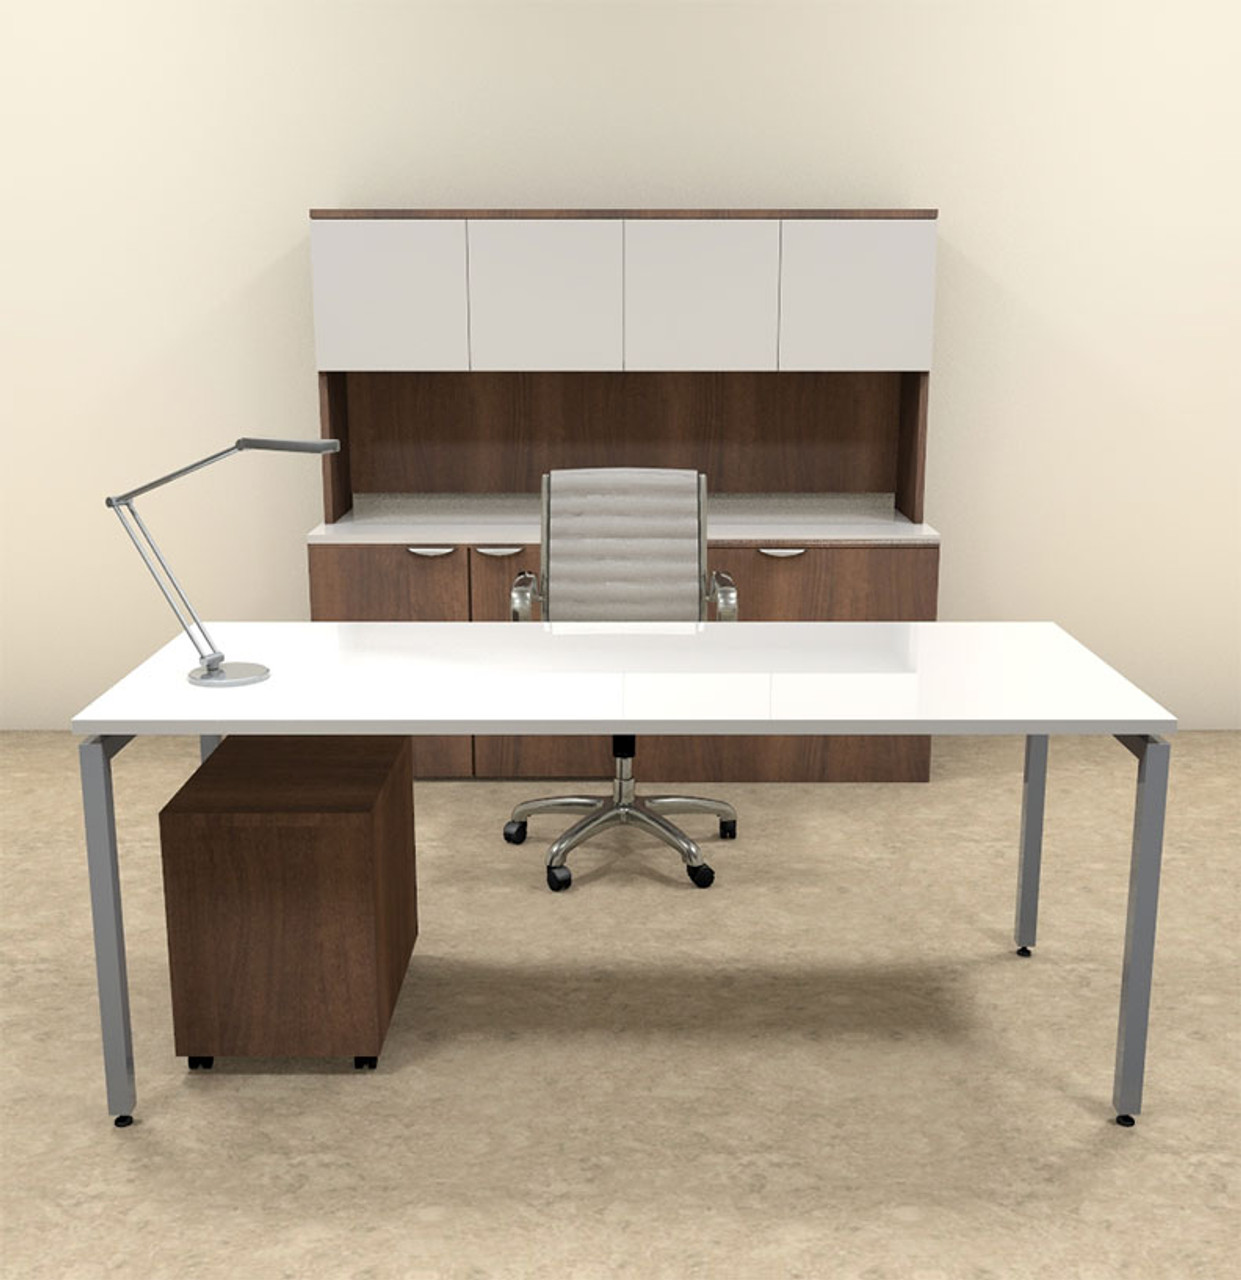 Modern Executive Office Desk Modern Furniture L Shape Office Desk